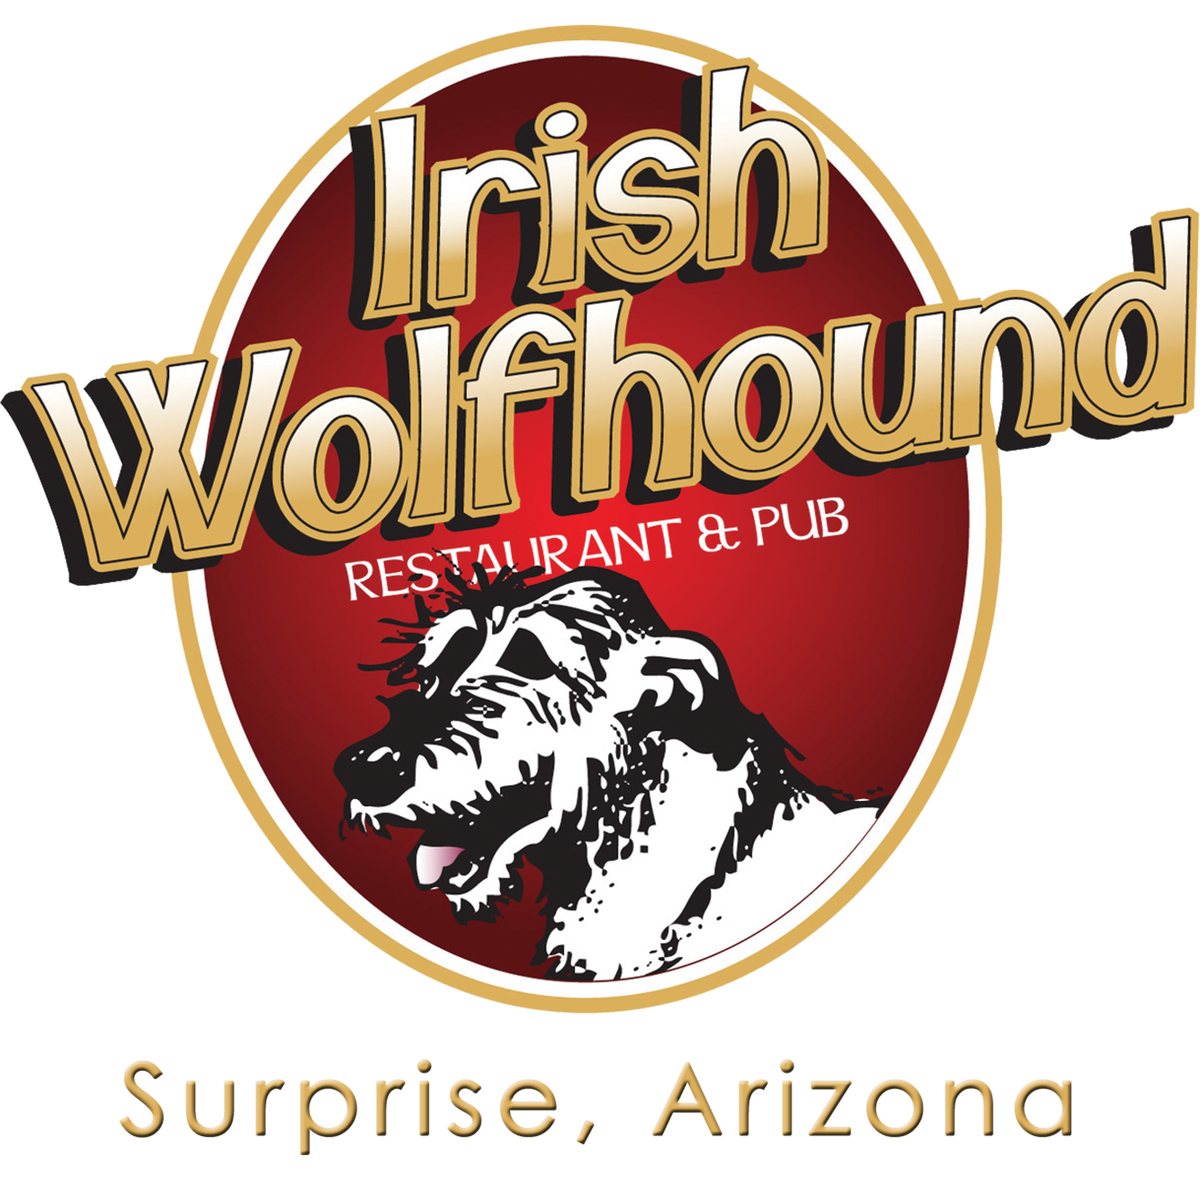 Irish Wolfhound Restaurant & Pub